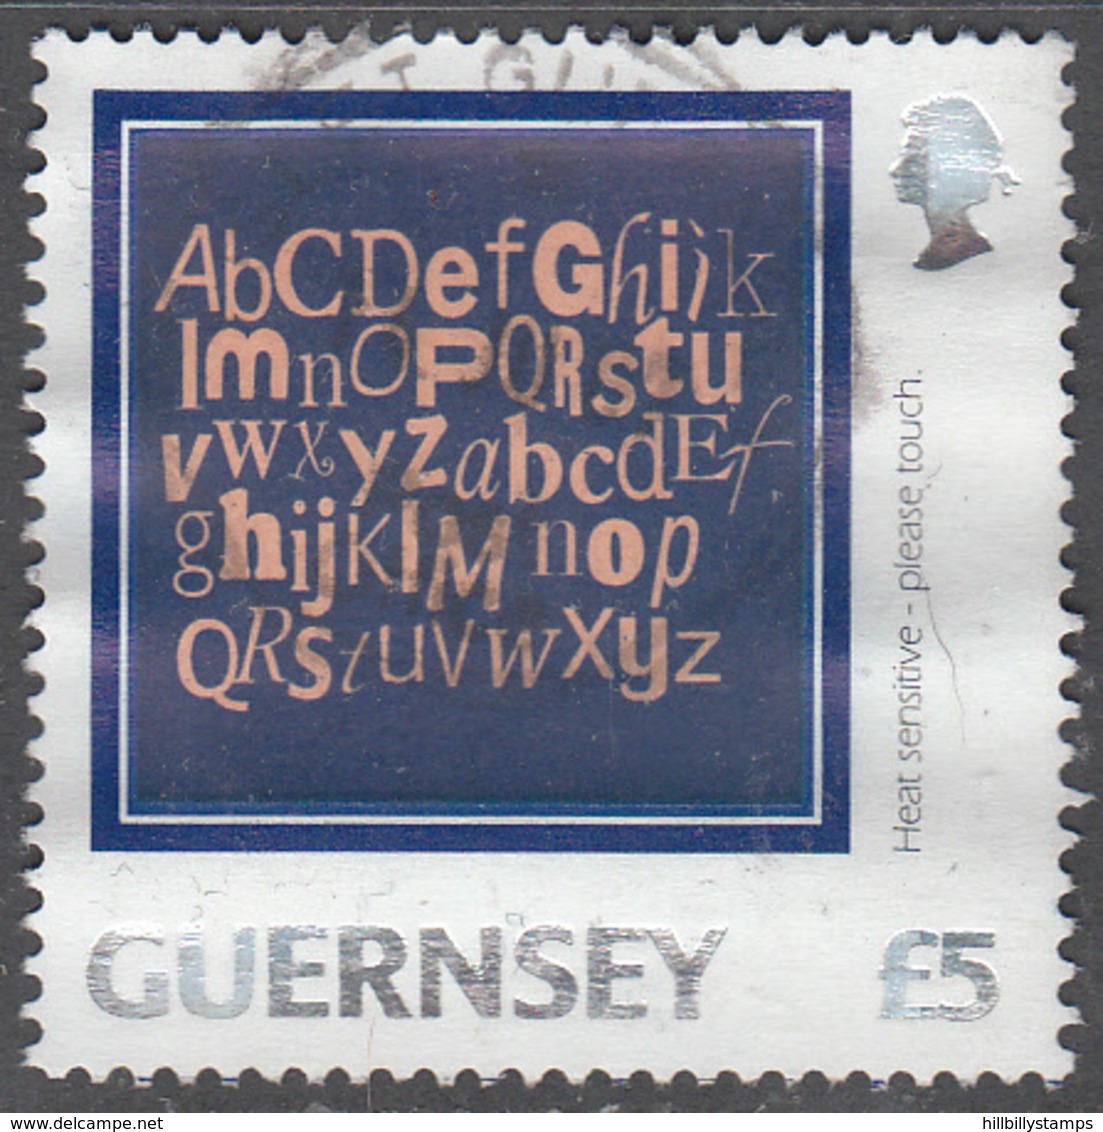 GUERNSEY      SCOTT NO. 809    USED    YEAR   2003 - Guernsey